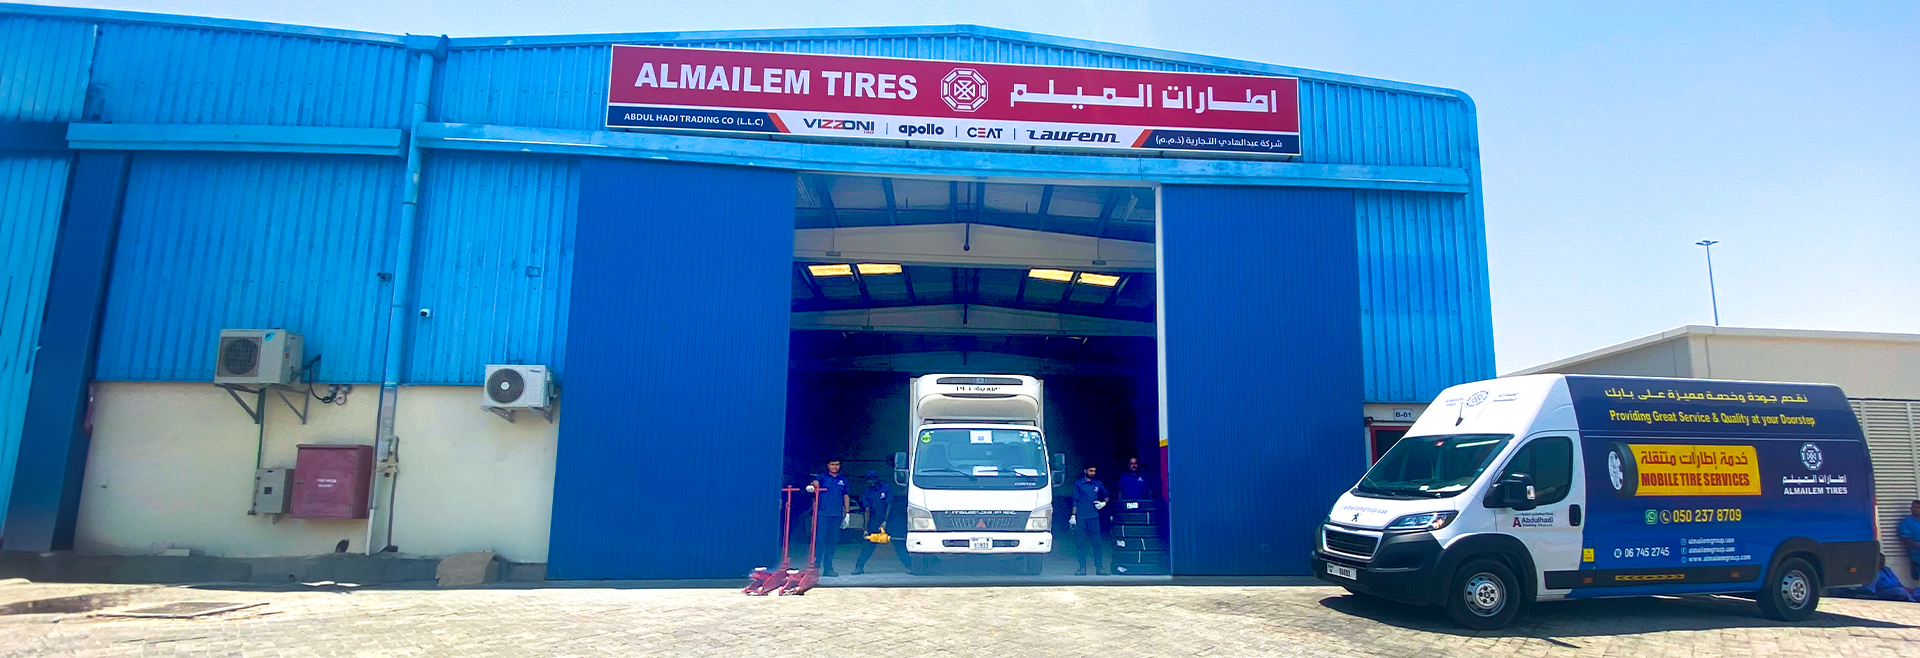 AlMailem Tires Dic banner